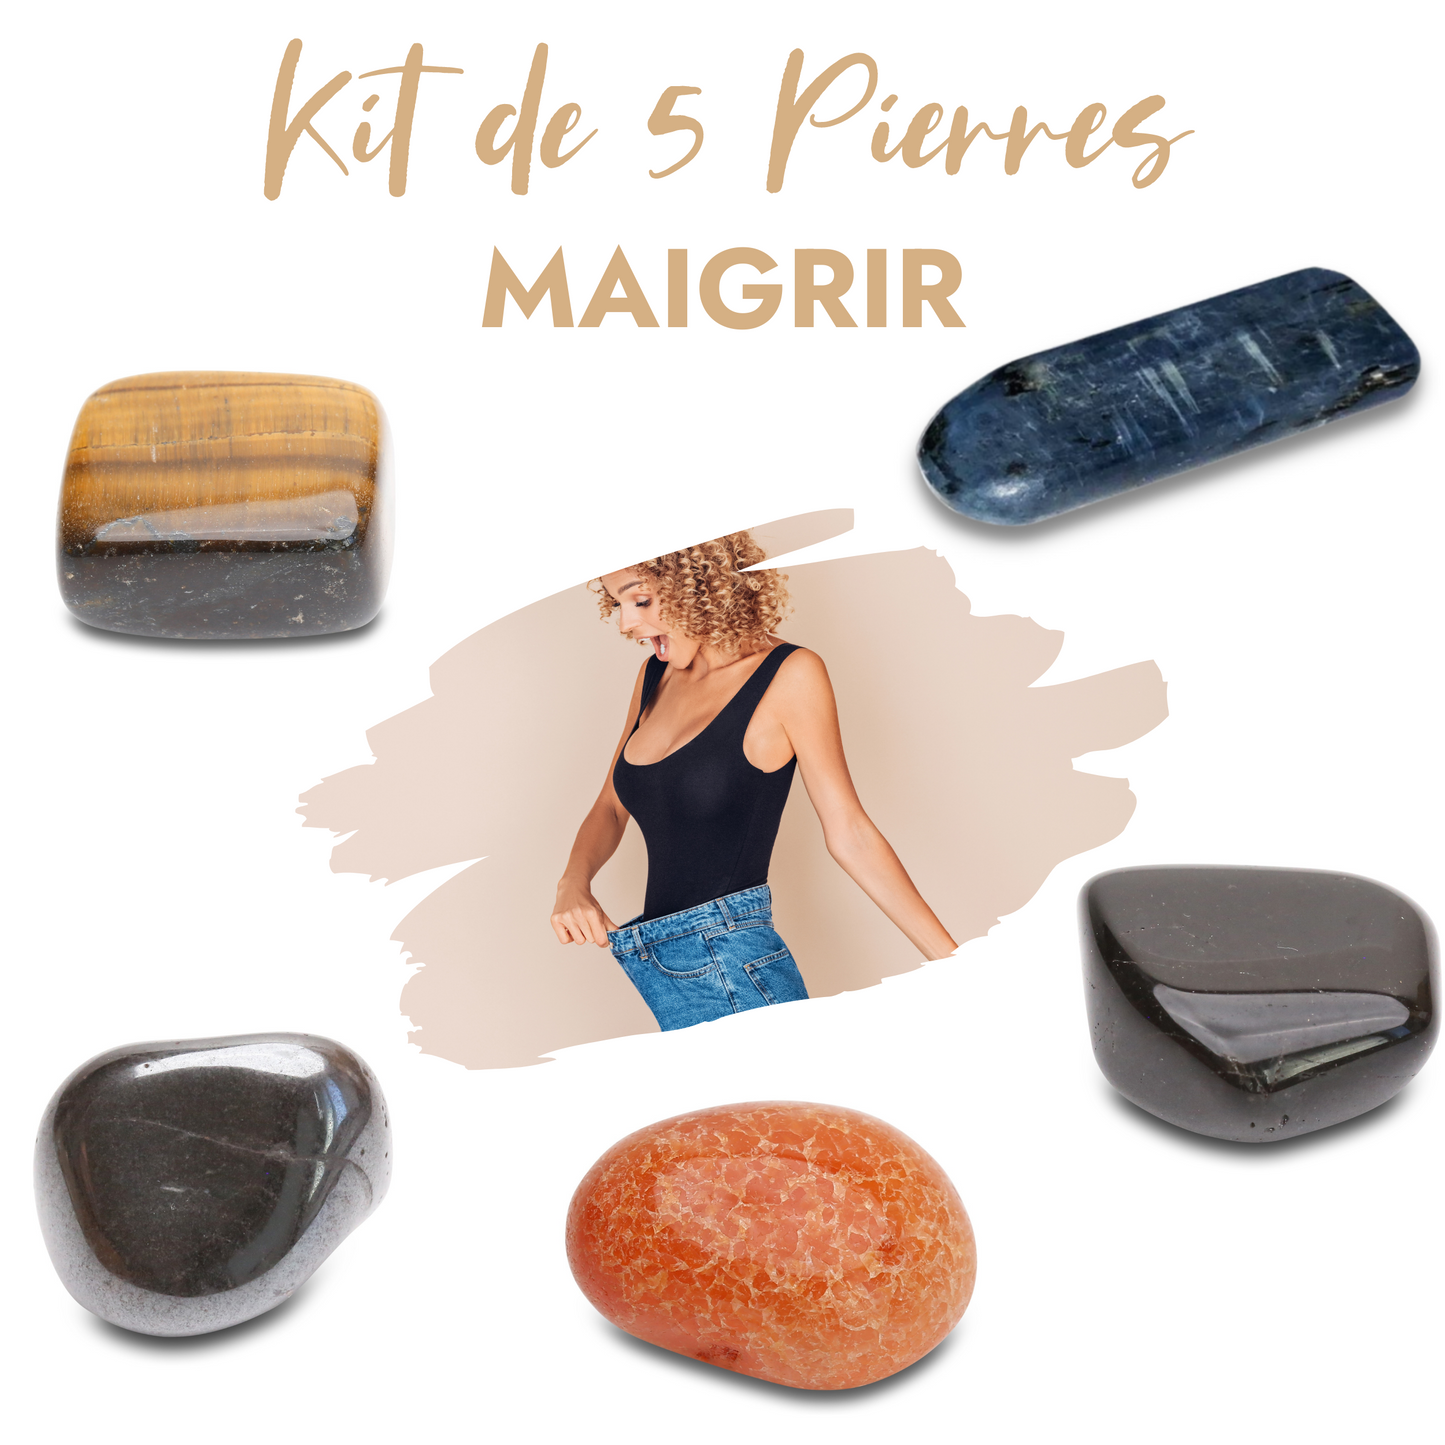 Kit de 5 pierres “Maigrir” - Karma Yoga Shop